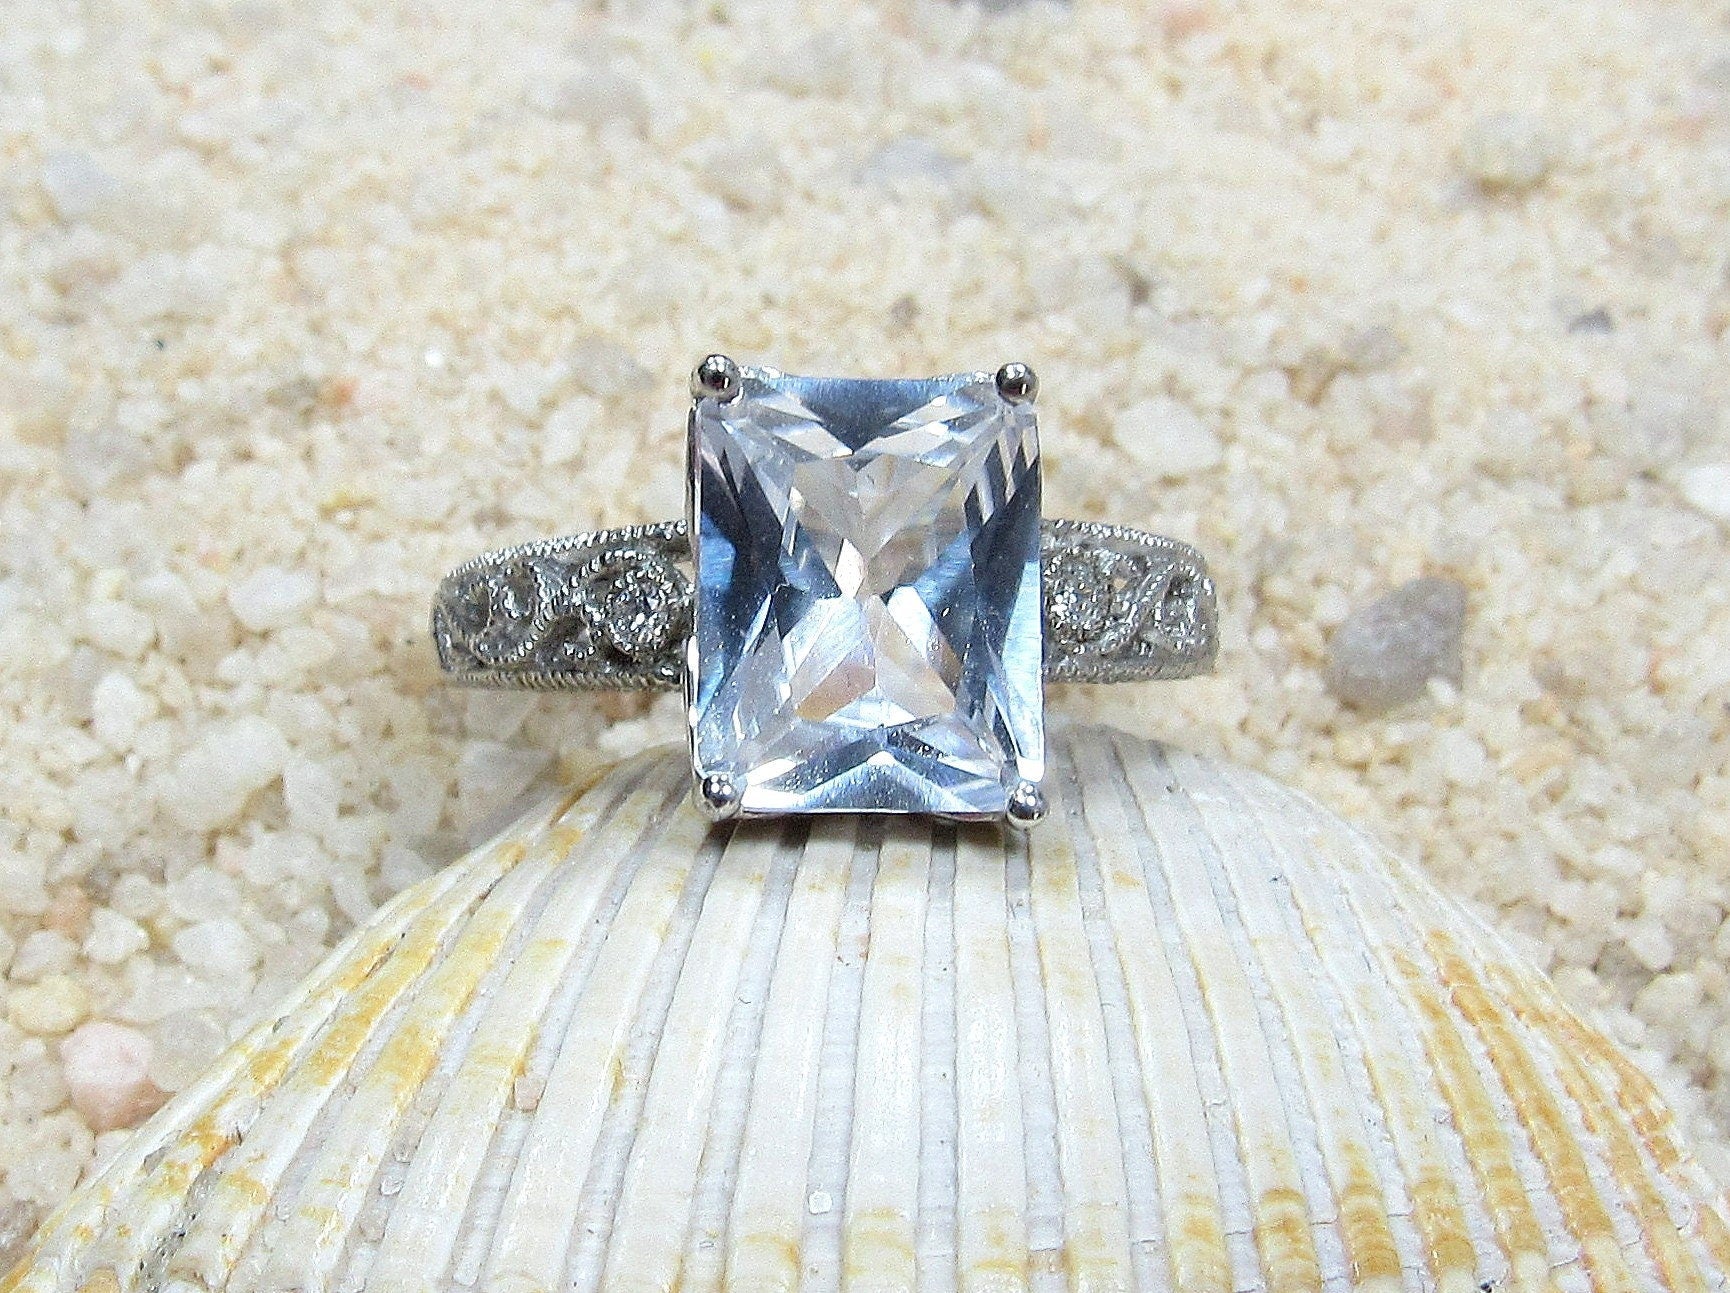 4ct Emerald Cut White Sapphire Engagement Ring, Filigree Ring, Milgrain Ring, Vintage Ring, September Birthstone, Polymnia, 10x8mm, BellaMoreDesign.com